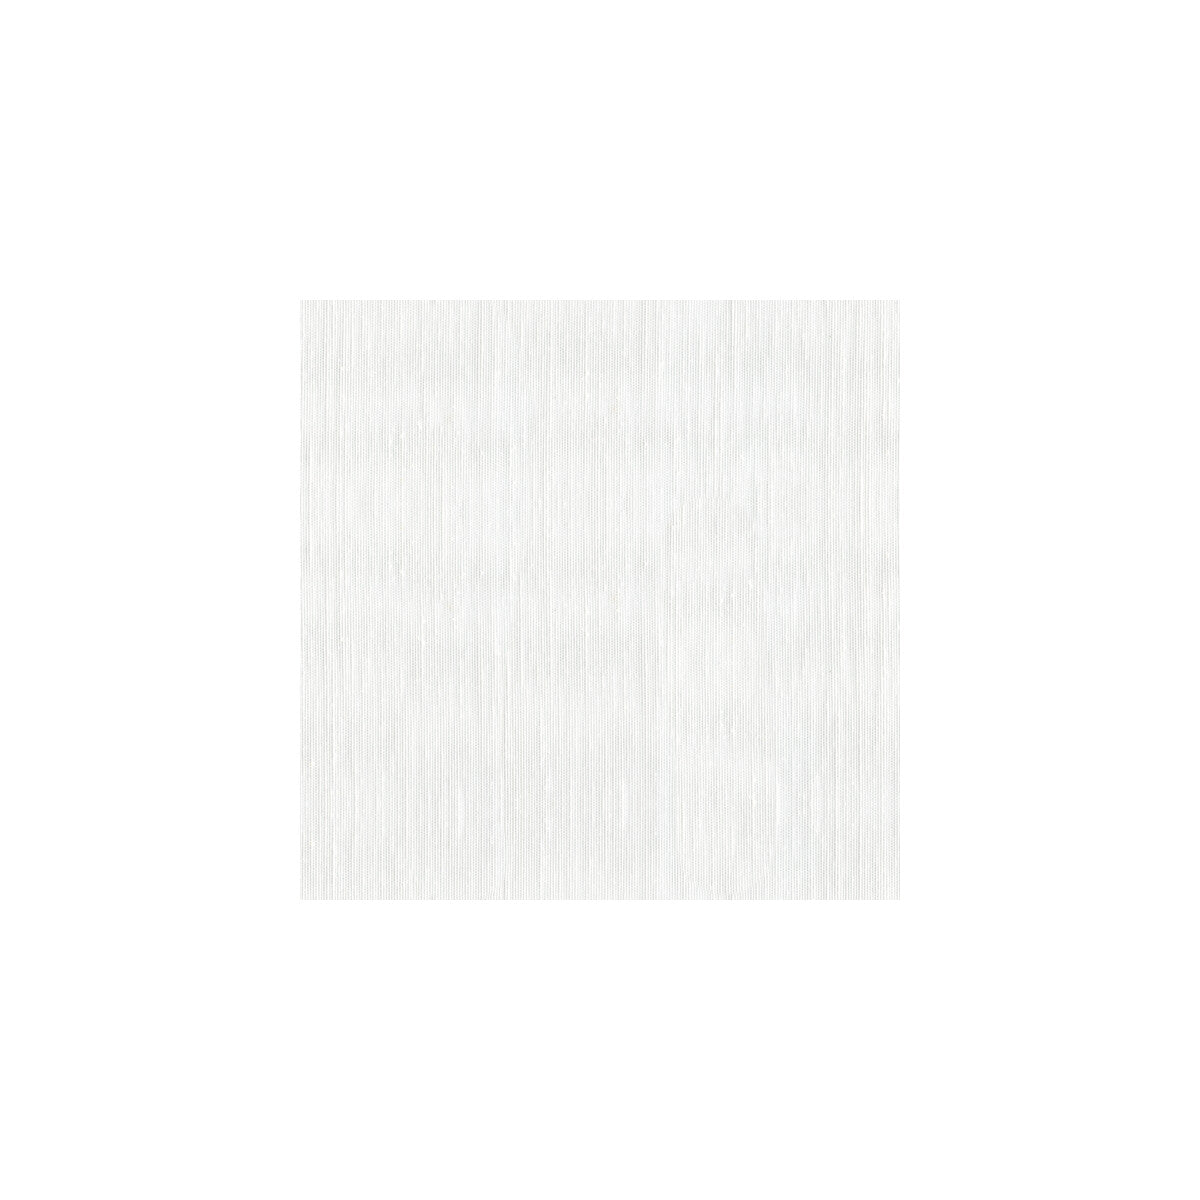 Kravet Basics fabric in 3691-101 color - pattern 3691.101.0 - by Kravet Basics in the Gis collection